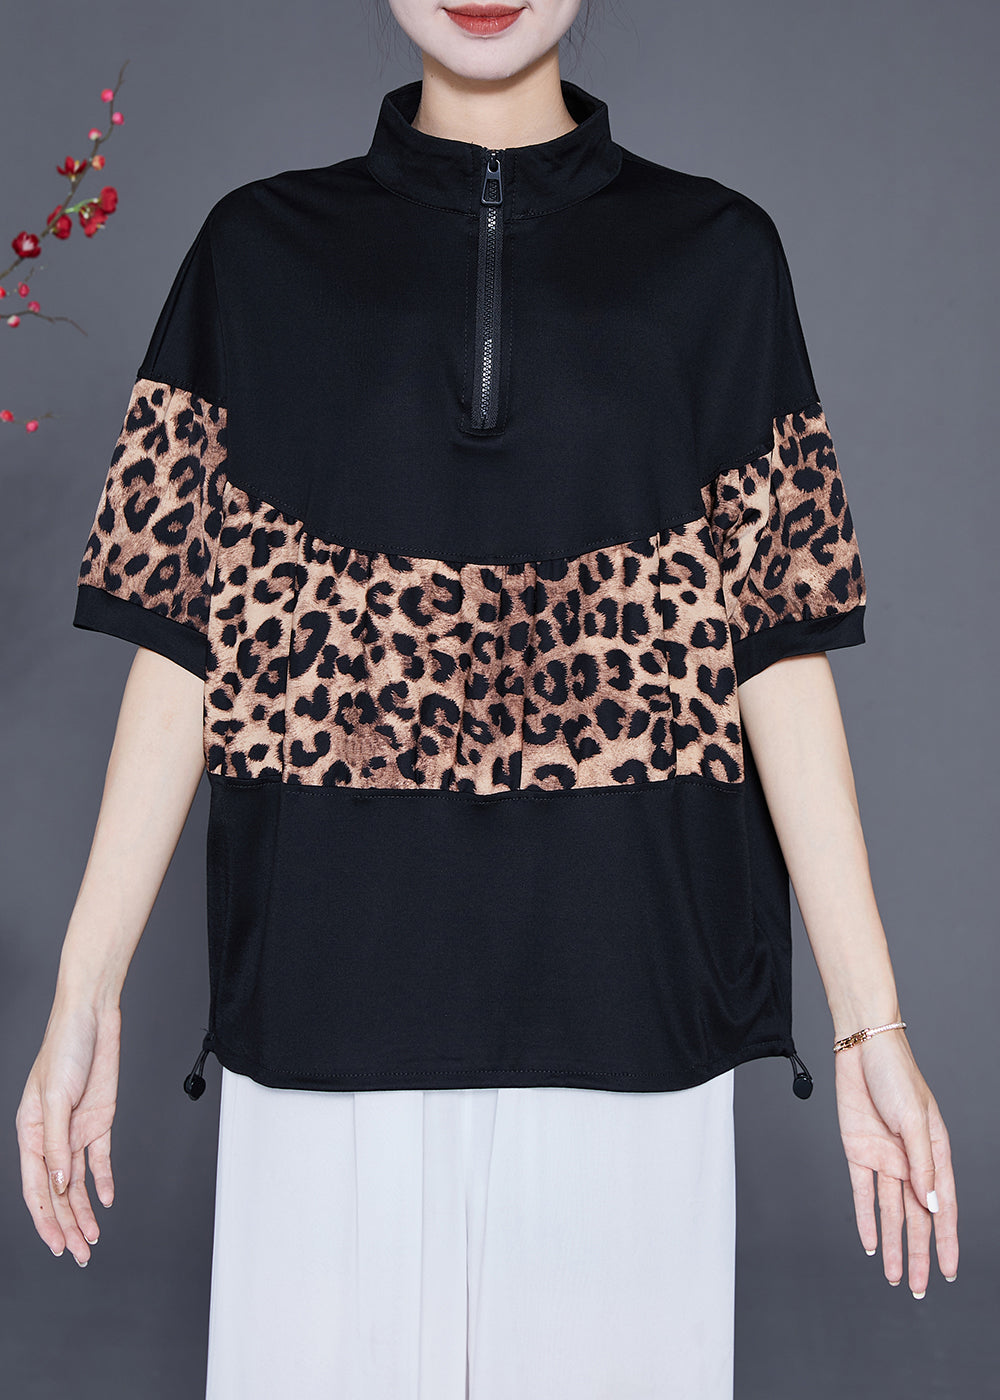 Black Patchwork Leopard Cotton Sweatshirts Top Drawstring Summer Ada Fashion